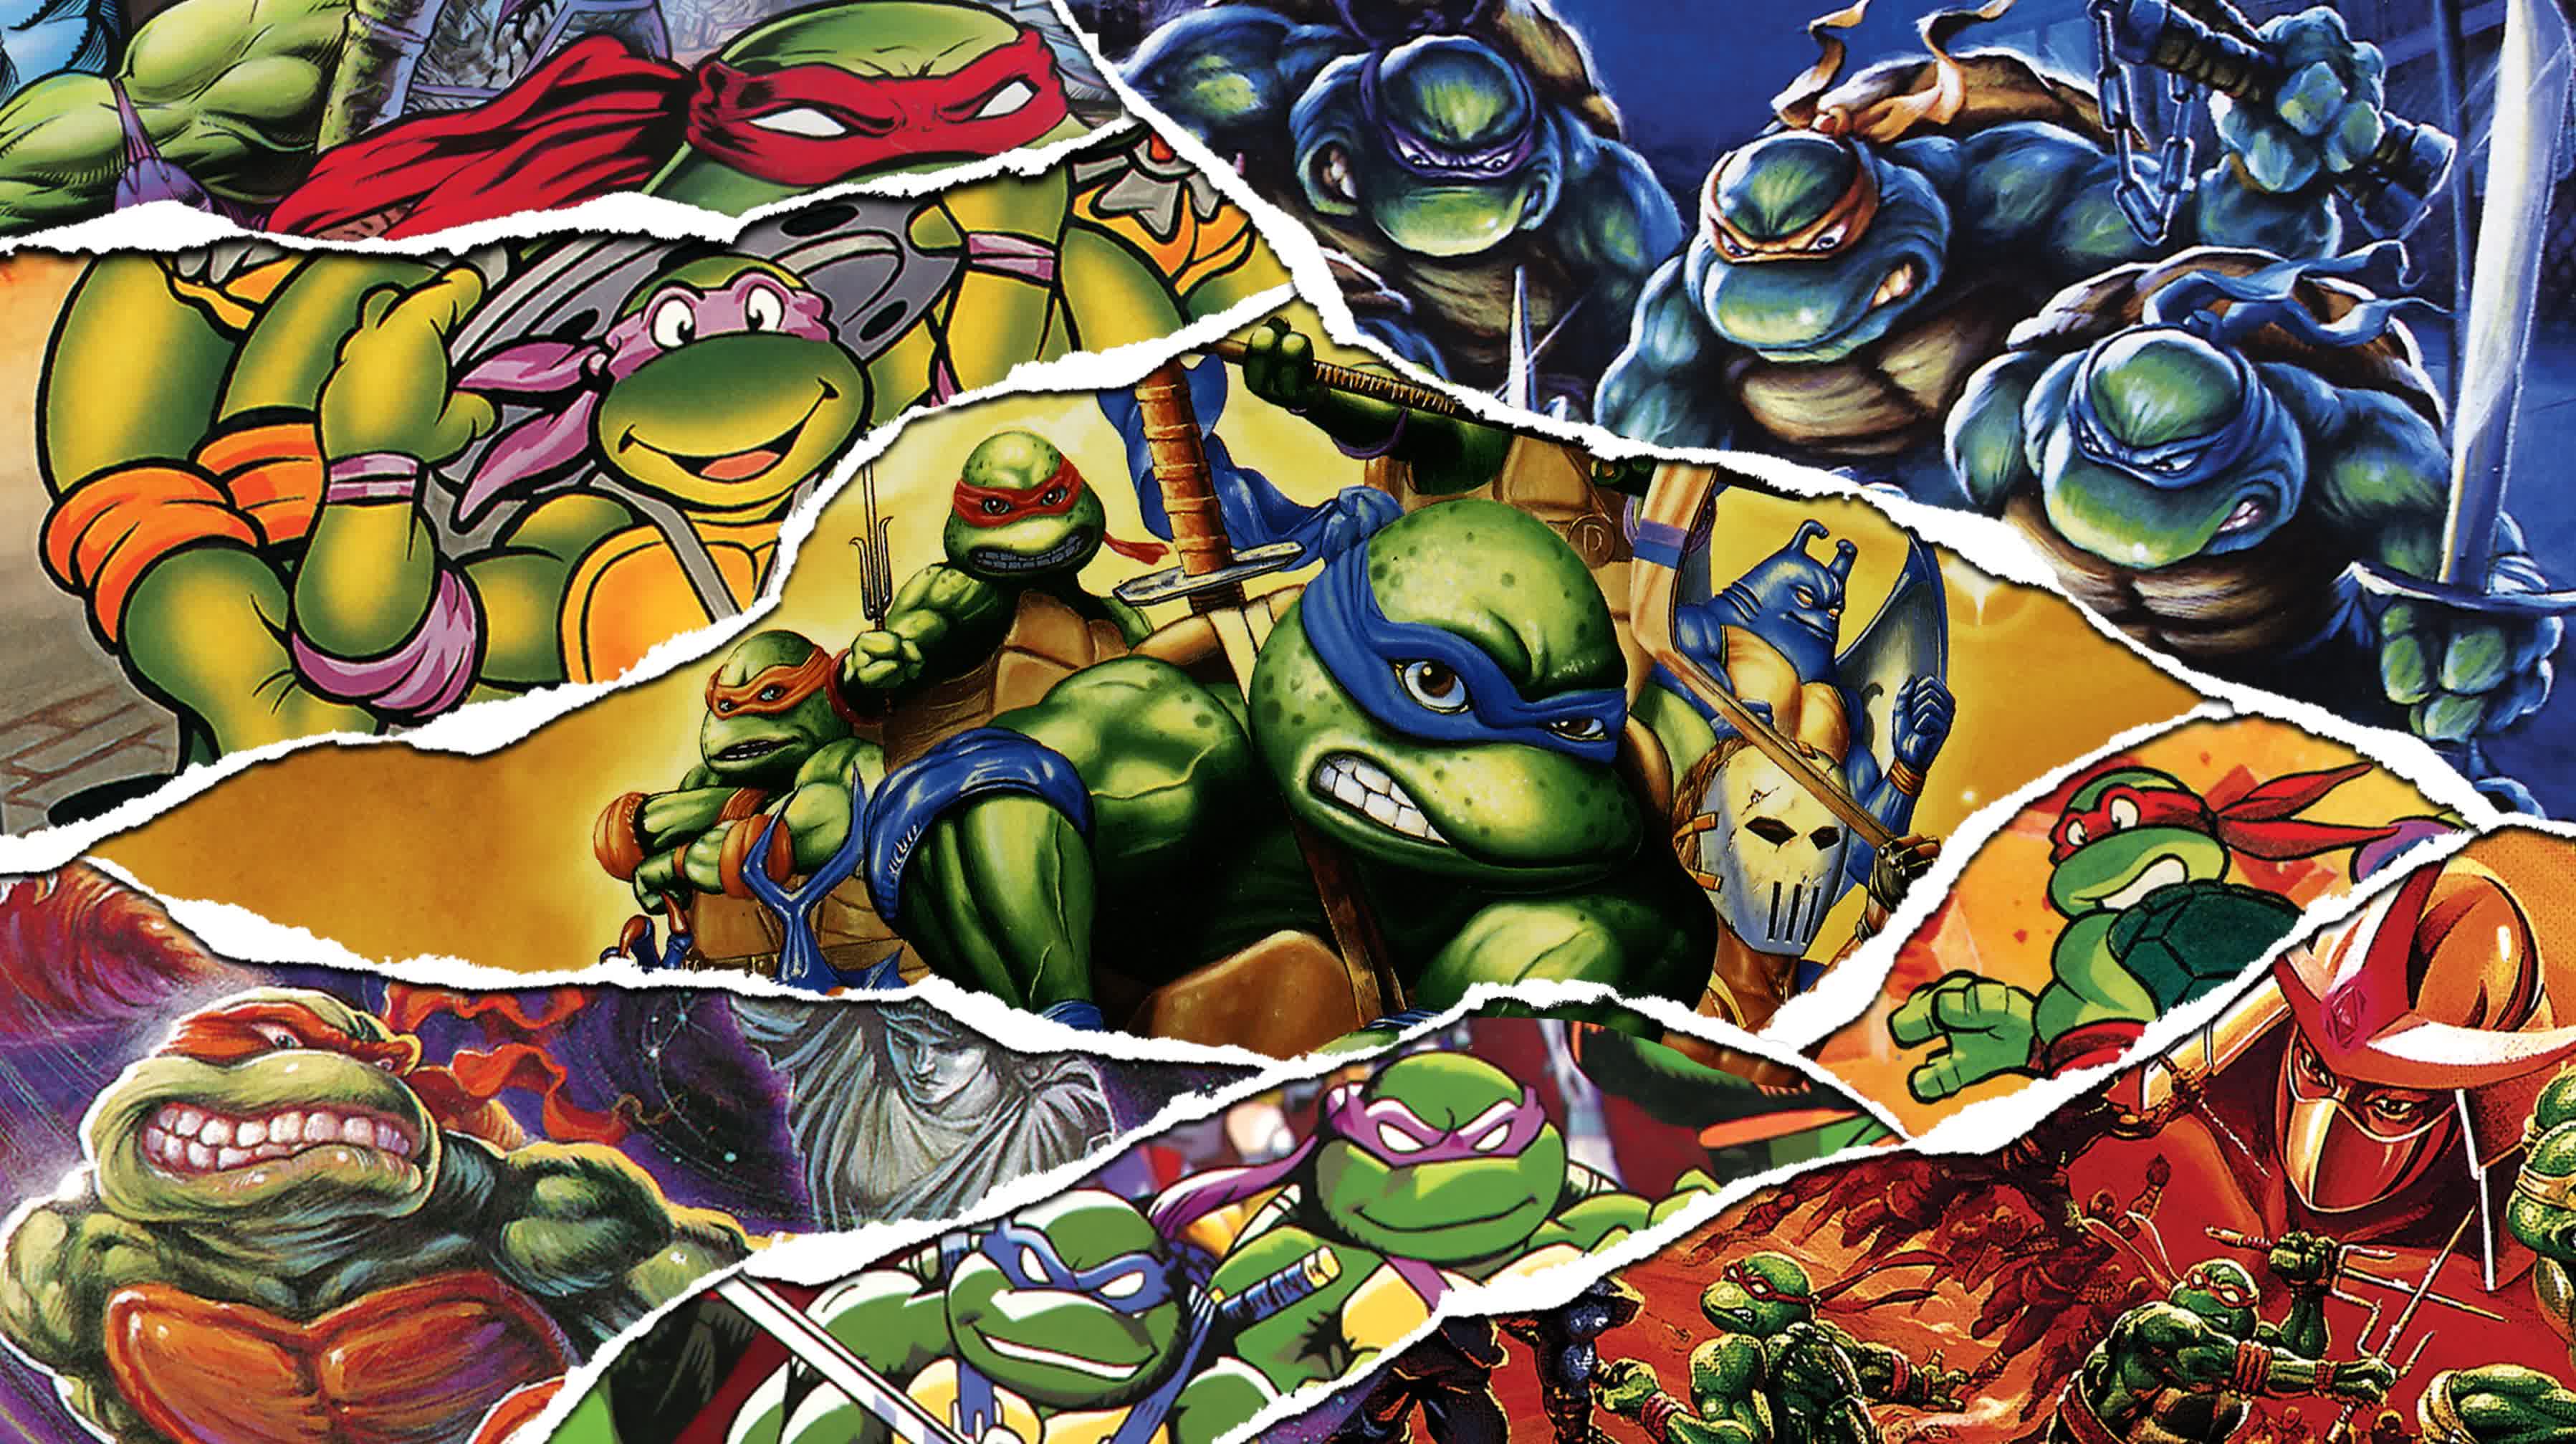 Teenage Mutant Ninja Turtles: The Cowabunga Collection includes 13 classics